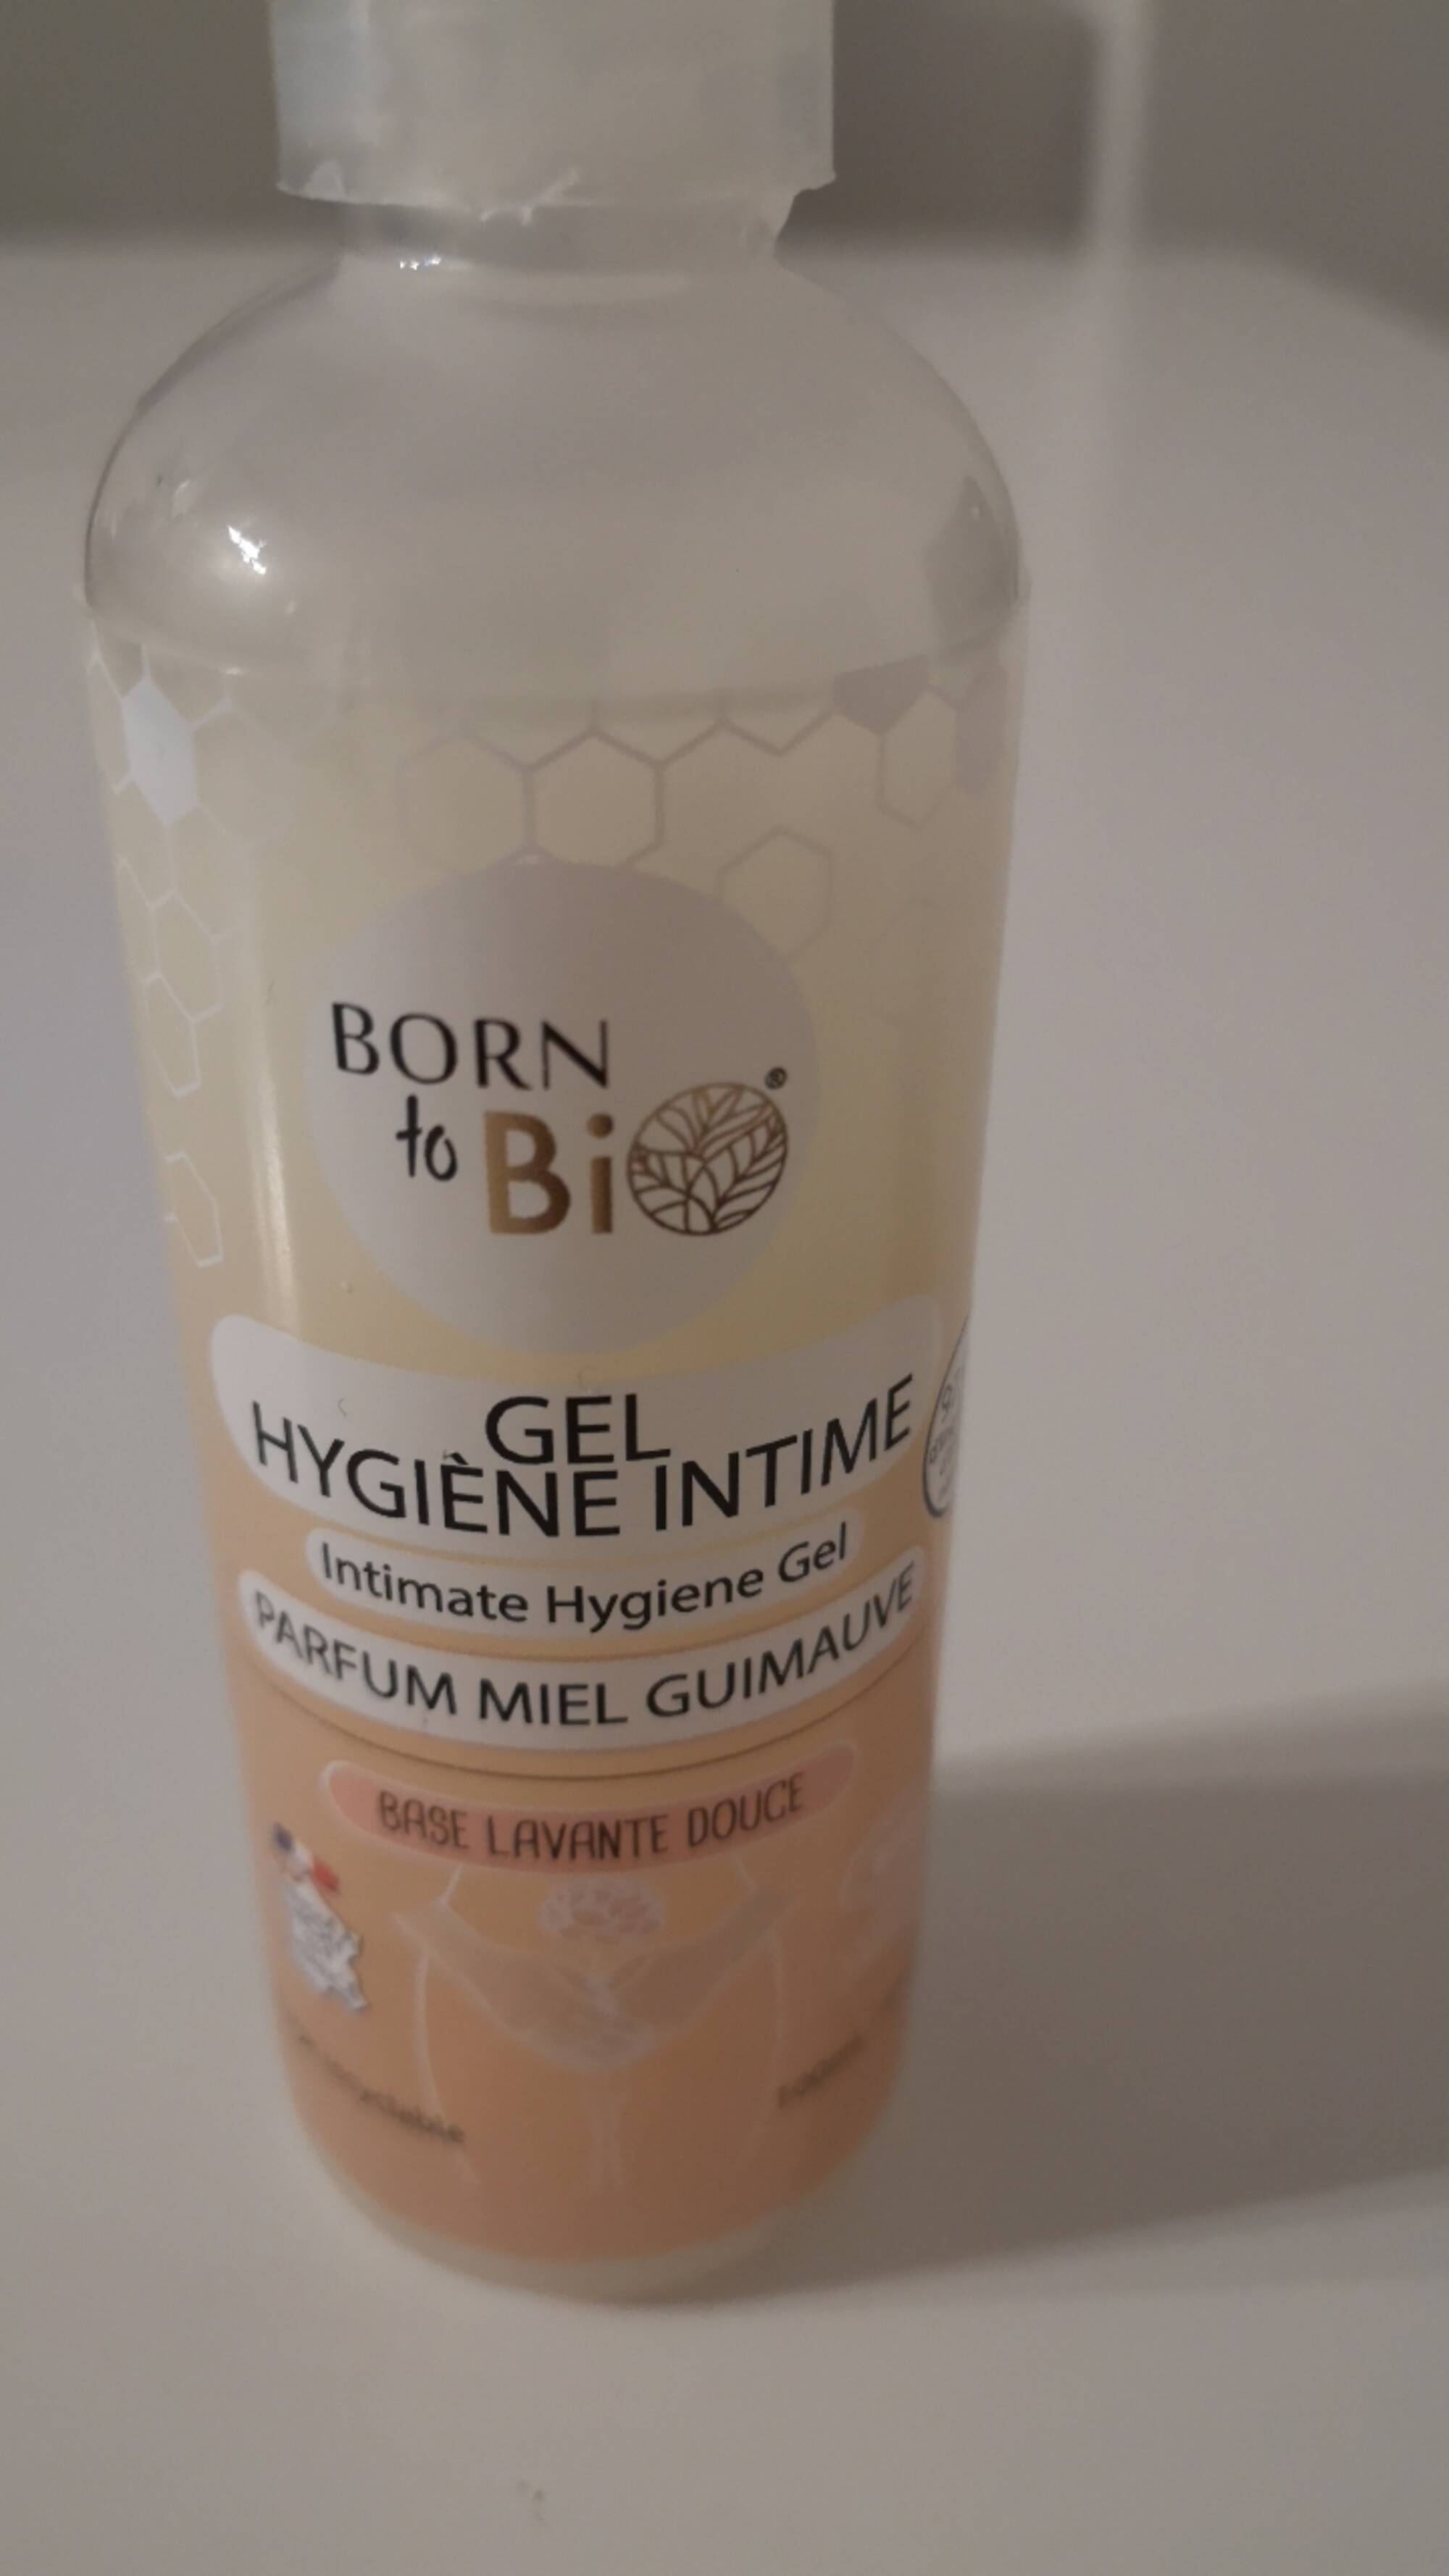 BORN TO BIO - Gel hygiène intime parfum miel guimauve